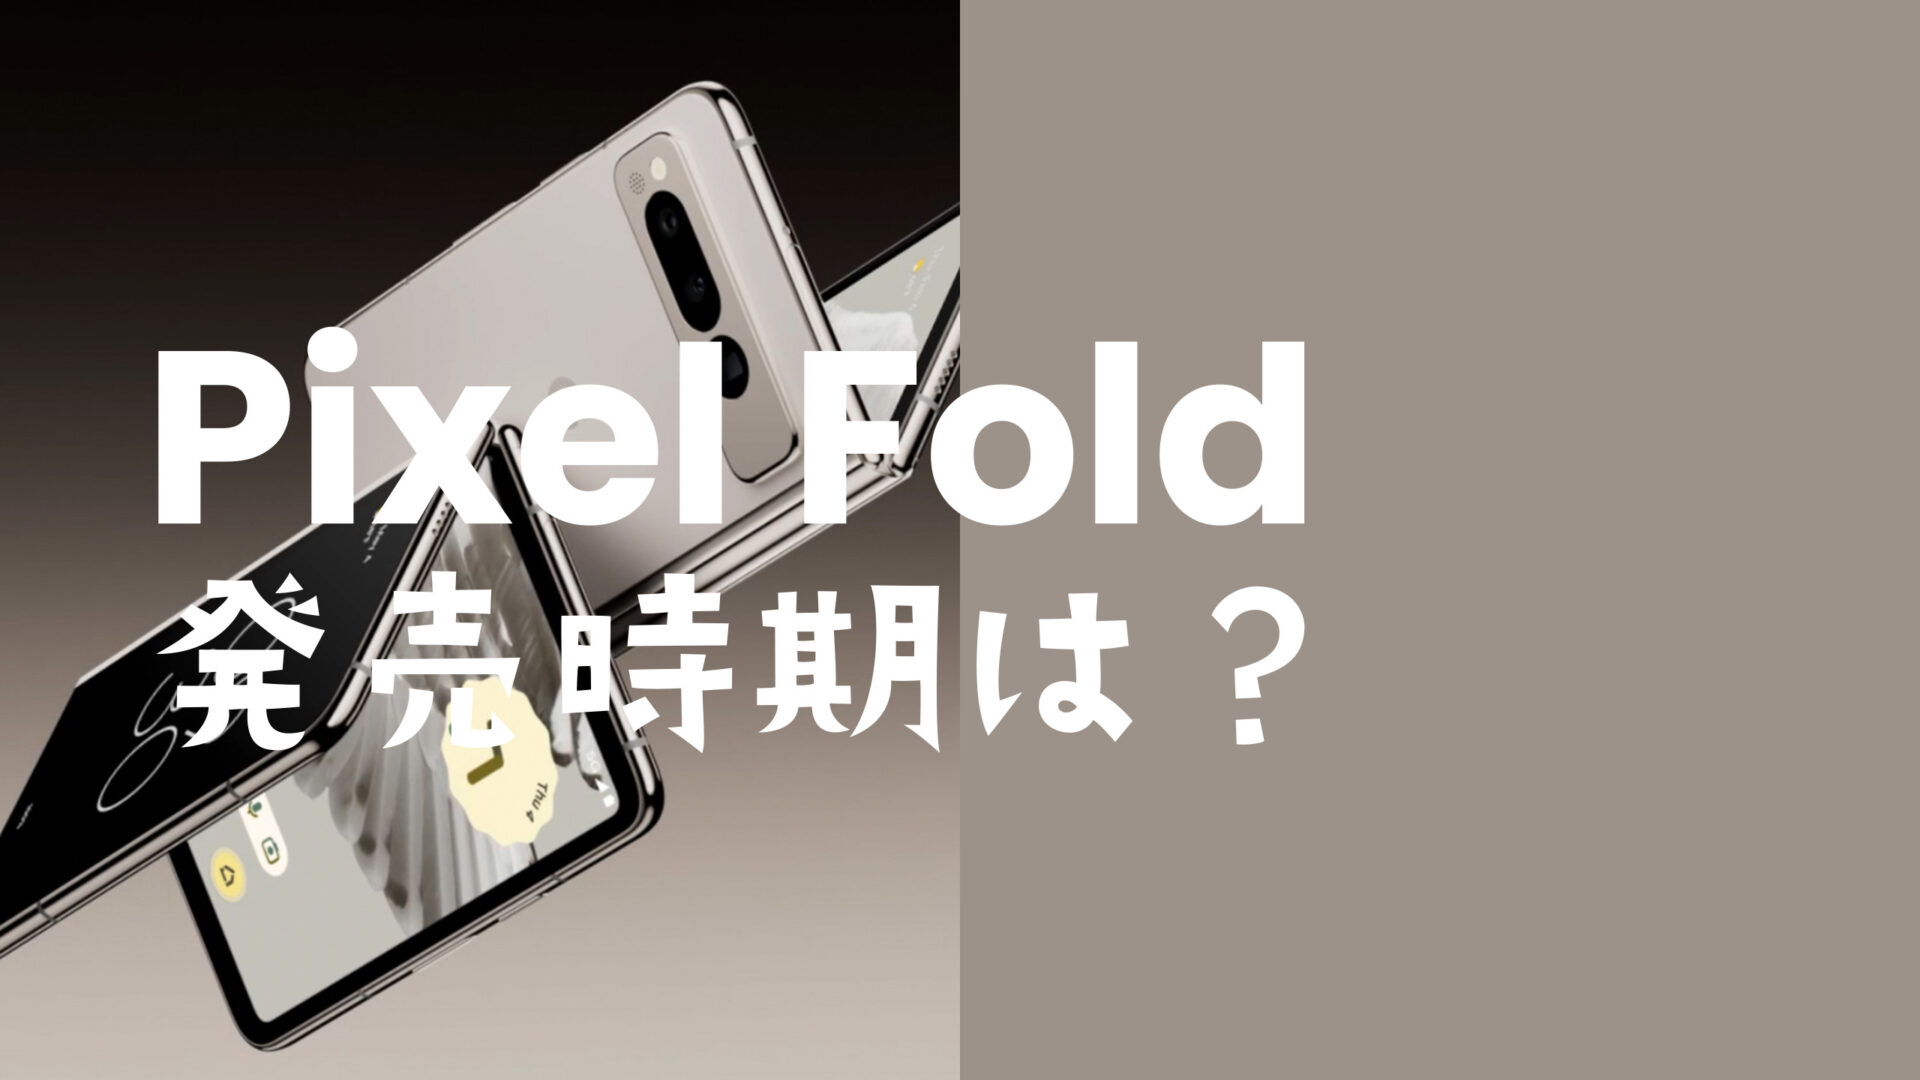 Google Pixel Fold(ピクセルフォールド)はいつ発売？正式発表は5月10日で初の折りたたみ型のサムネイル画像